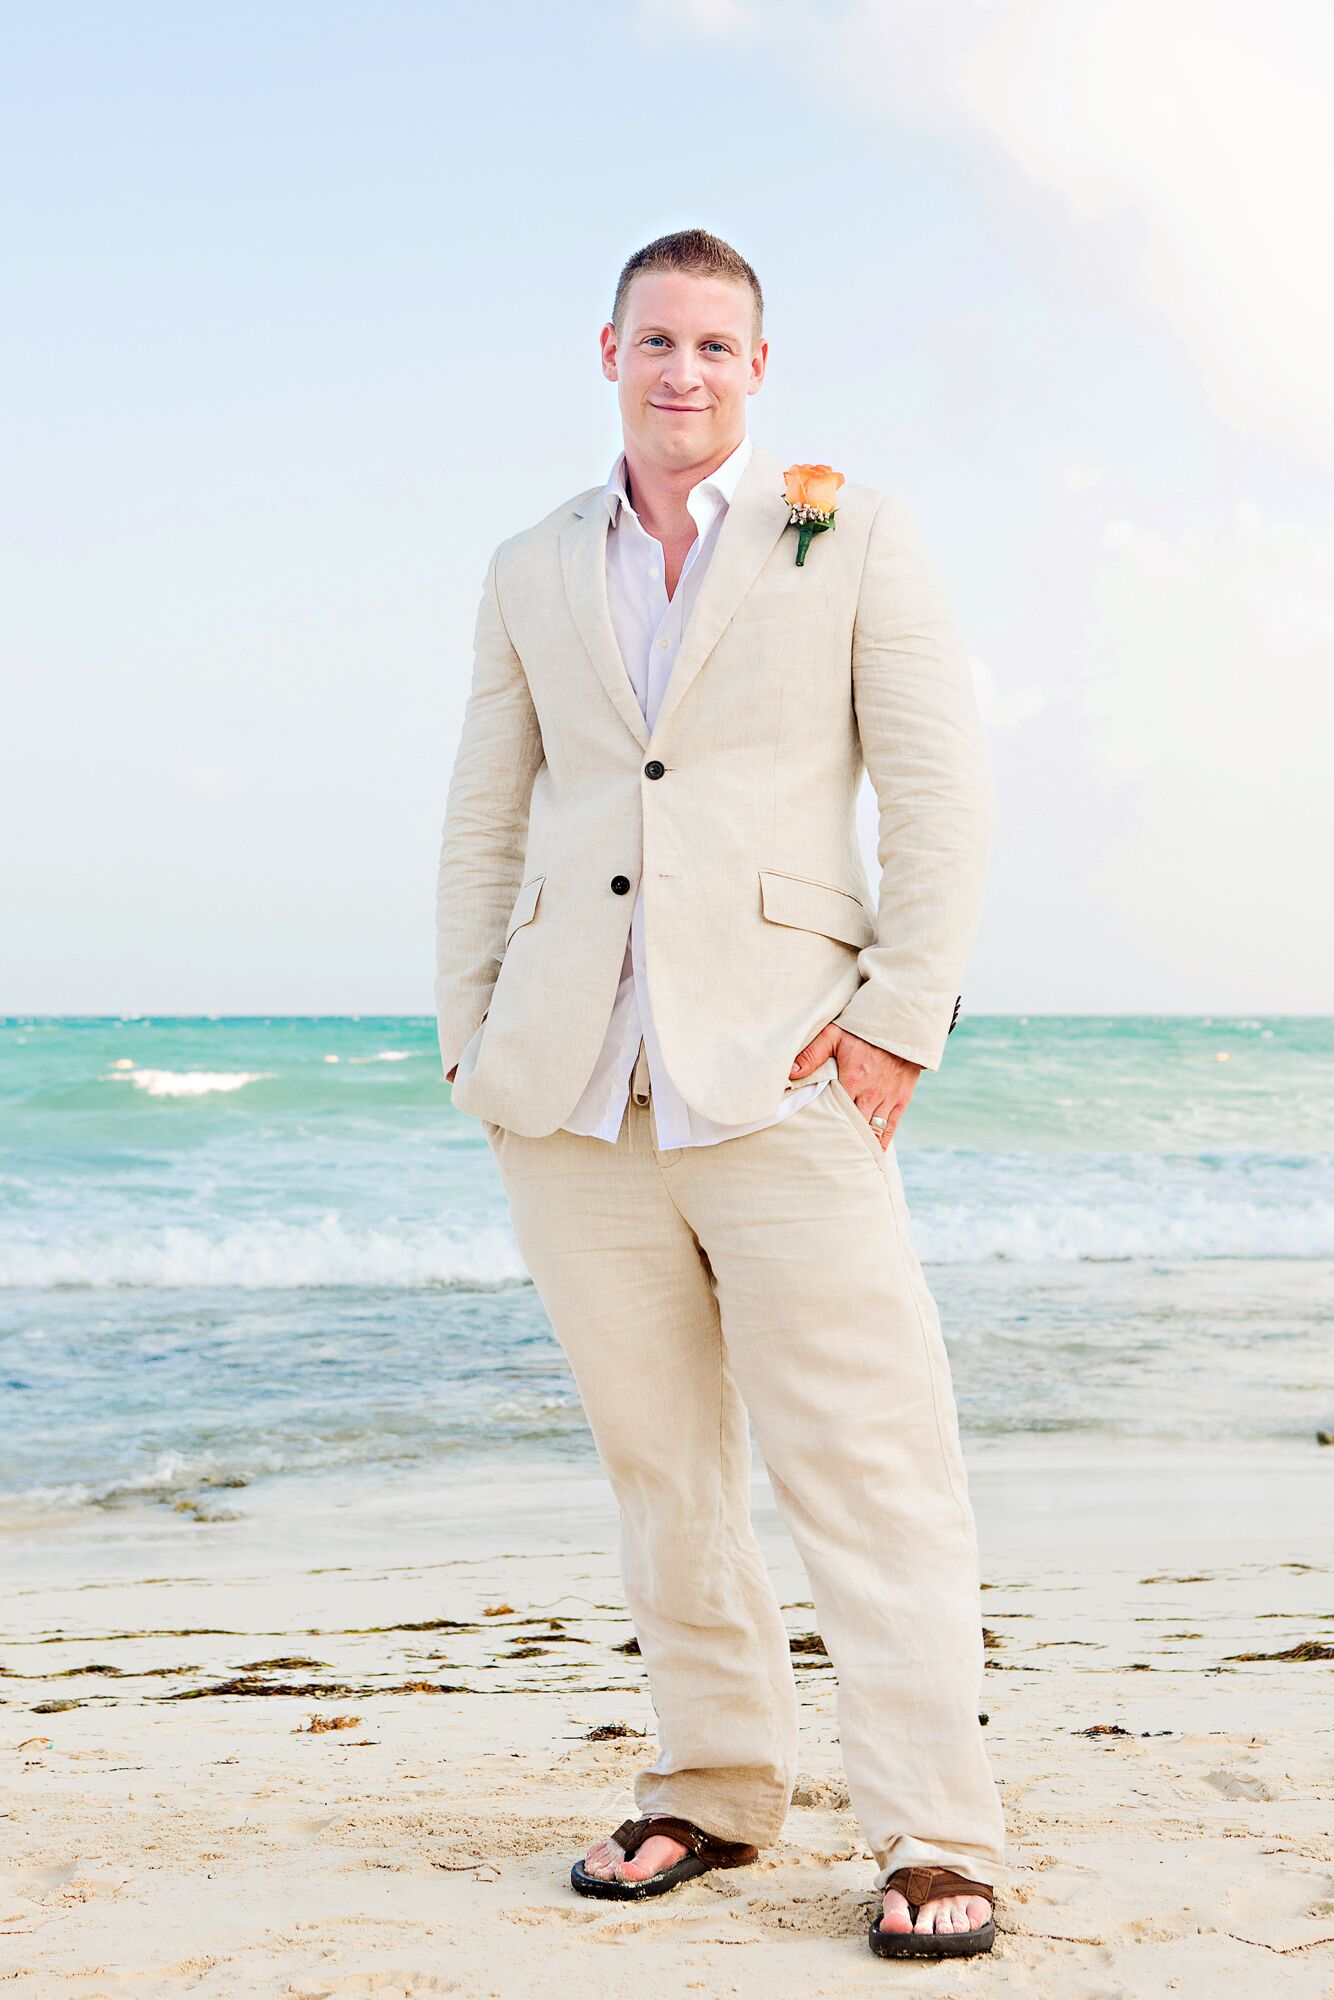 Basic Rules Of Beach-Wedding Style GQ | vlr.eng.br